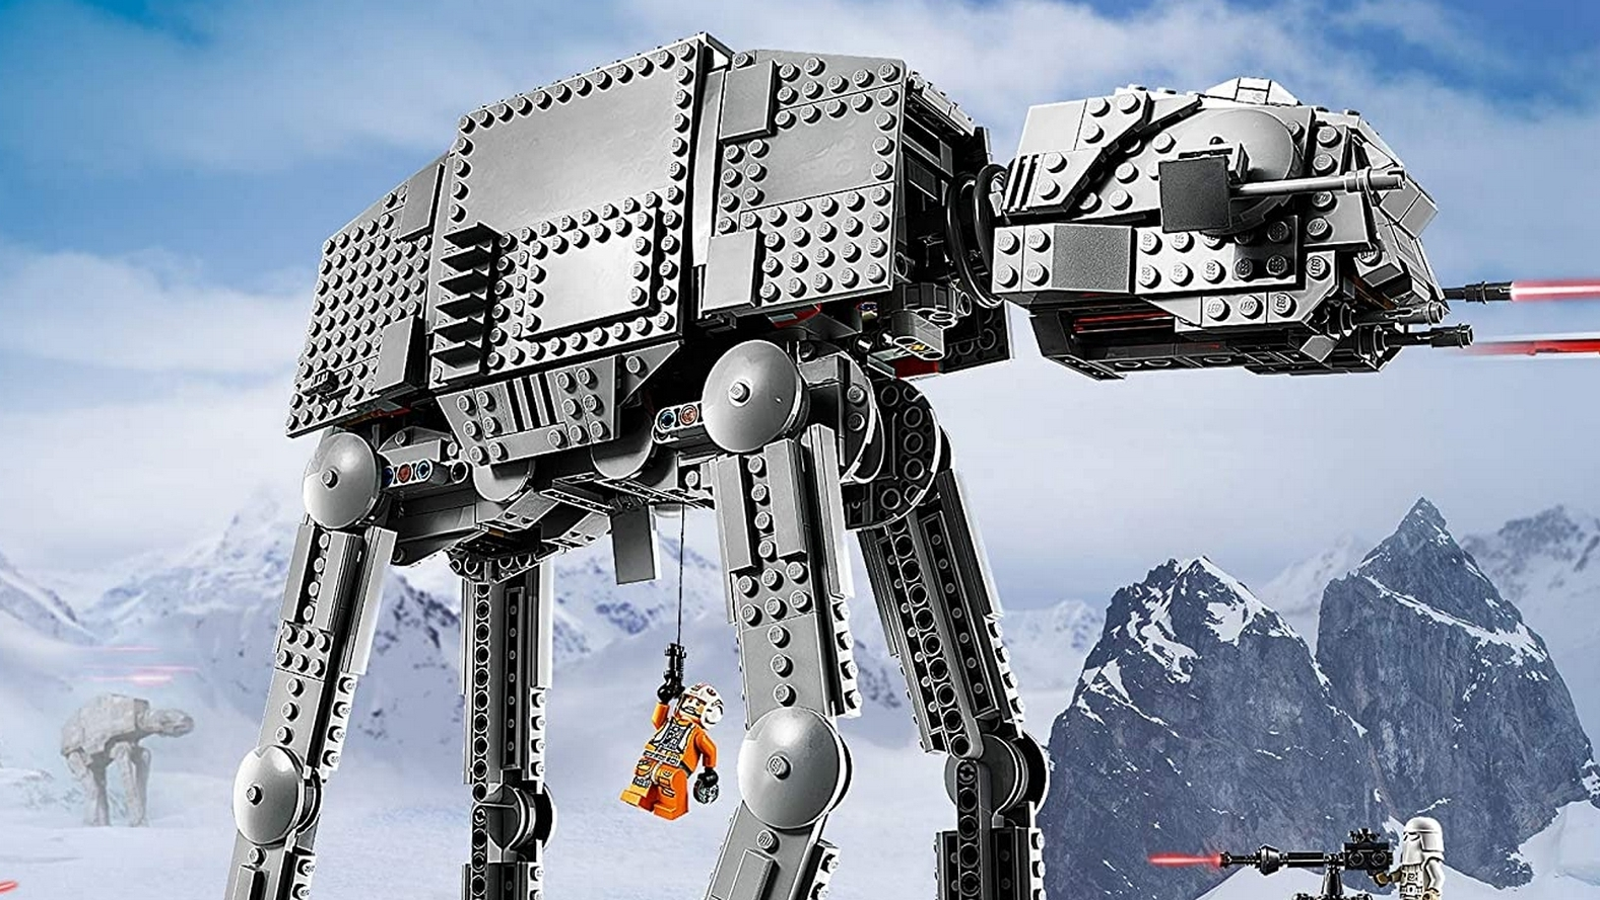 Lançado novo trailer de LEGO Star Wars: The Skywalker Saga - Cast Wars